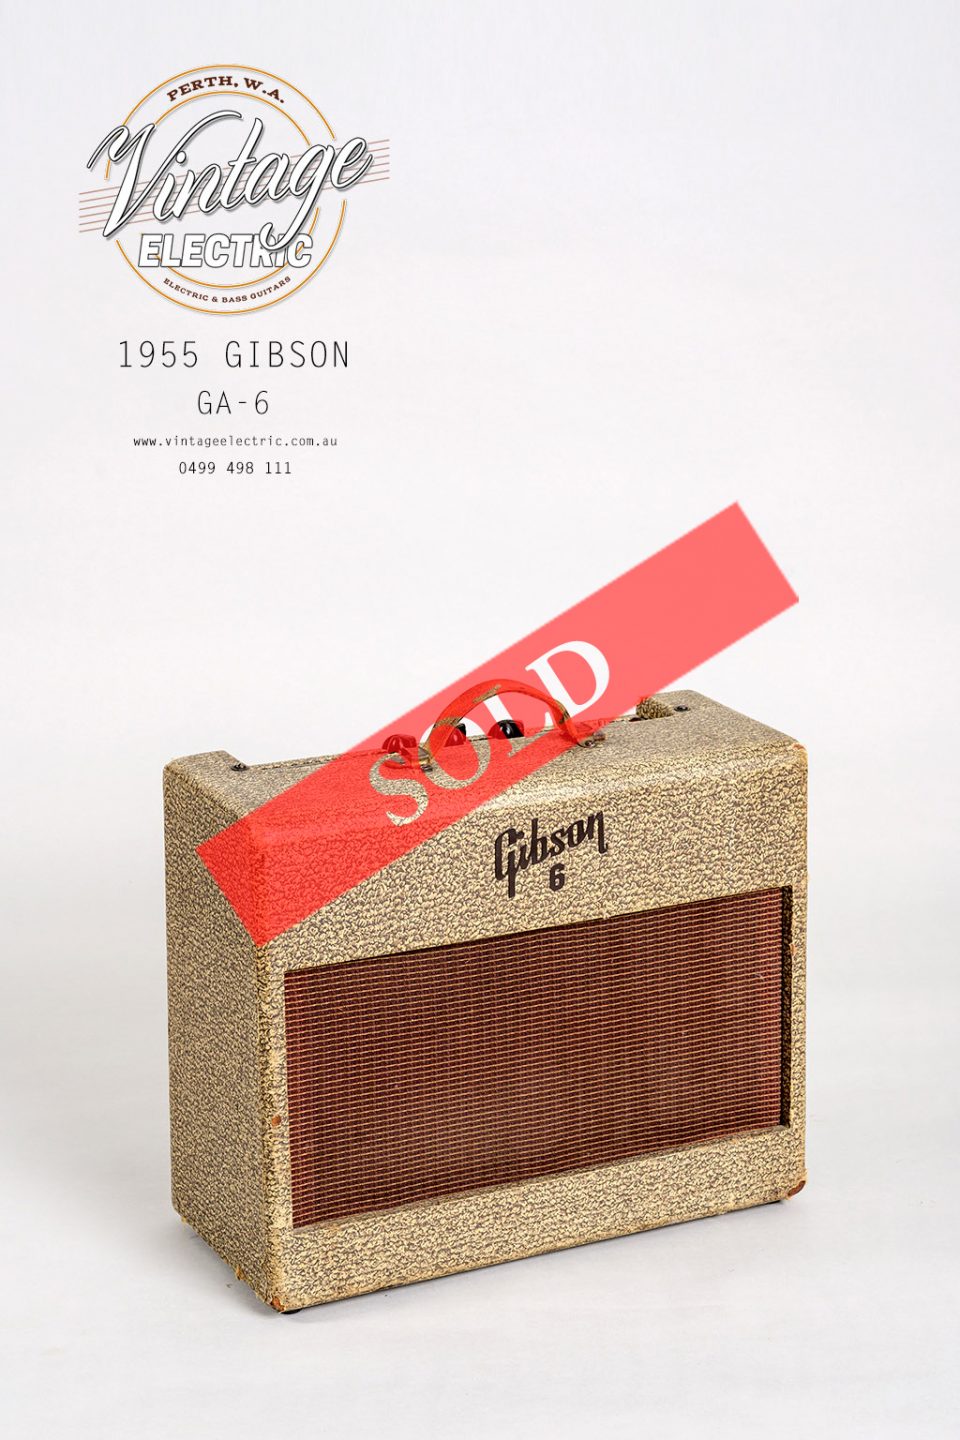 1955 Gibson GA-6 LARGE SOLD